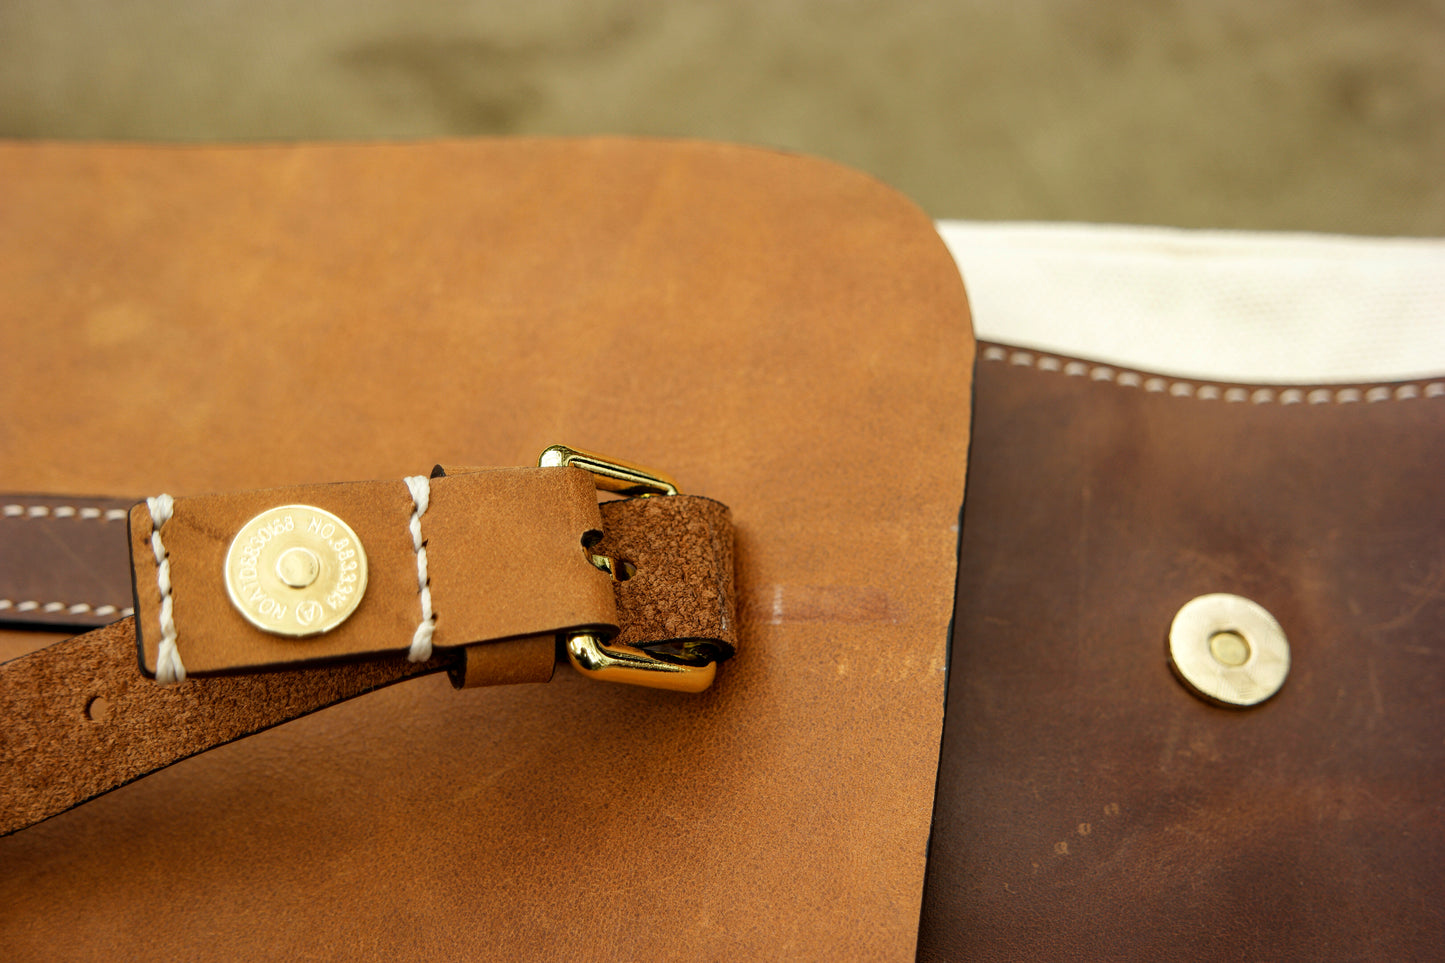 【PDF Pattern】 Leather Backpack,Making vegetable tanned leather briefcase,Classic Leather Backpack